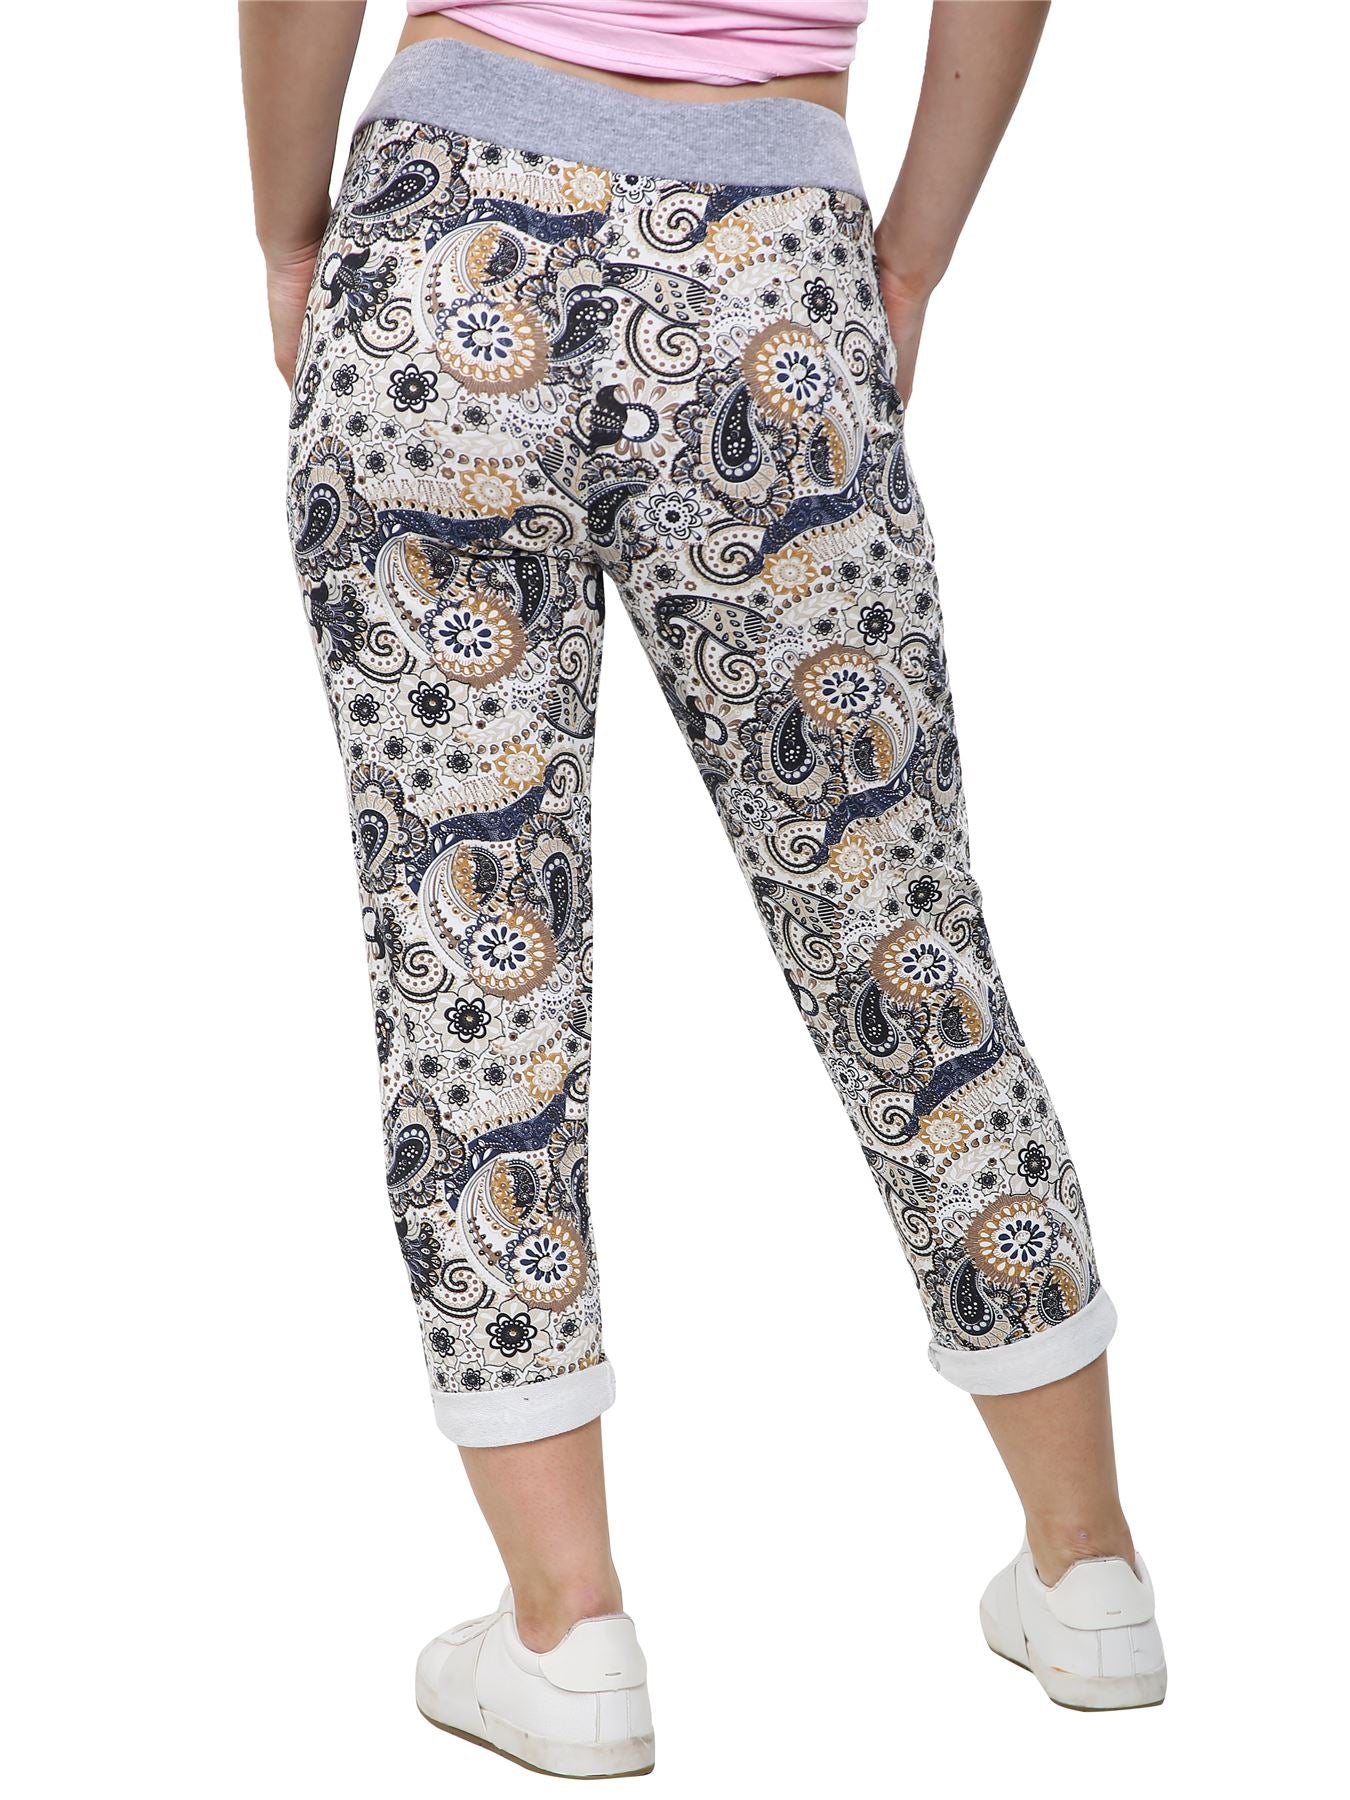 Floral Print Pocket Drawstring Trouser - Love My Fashions - Womens Fashions UK